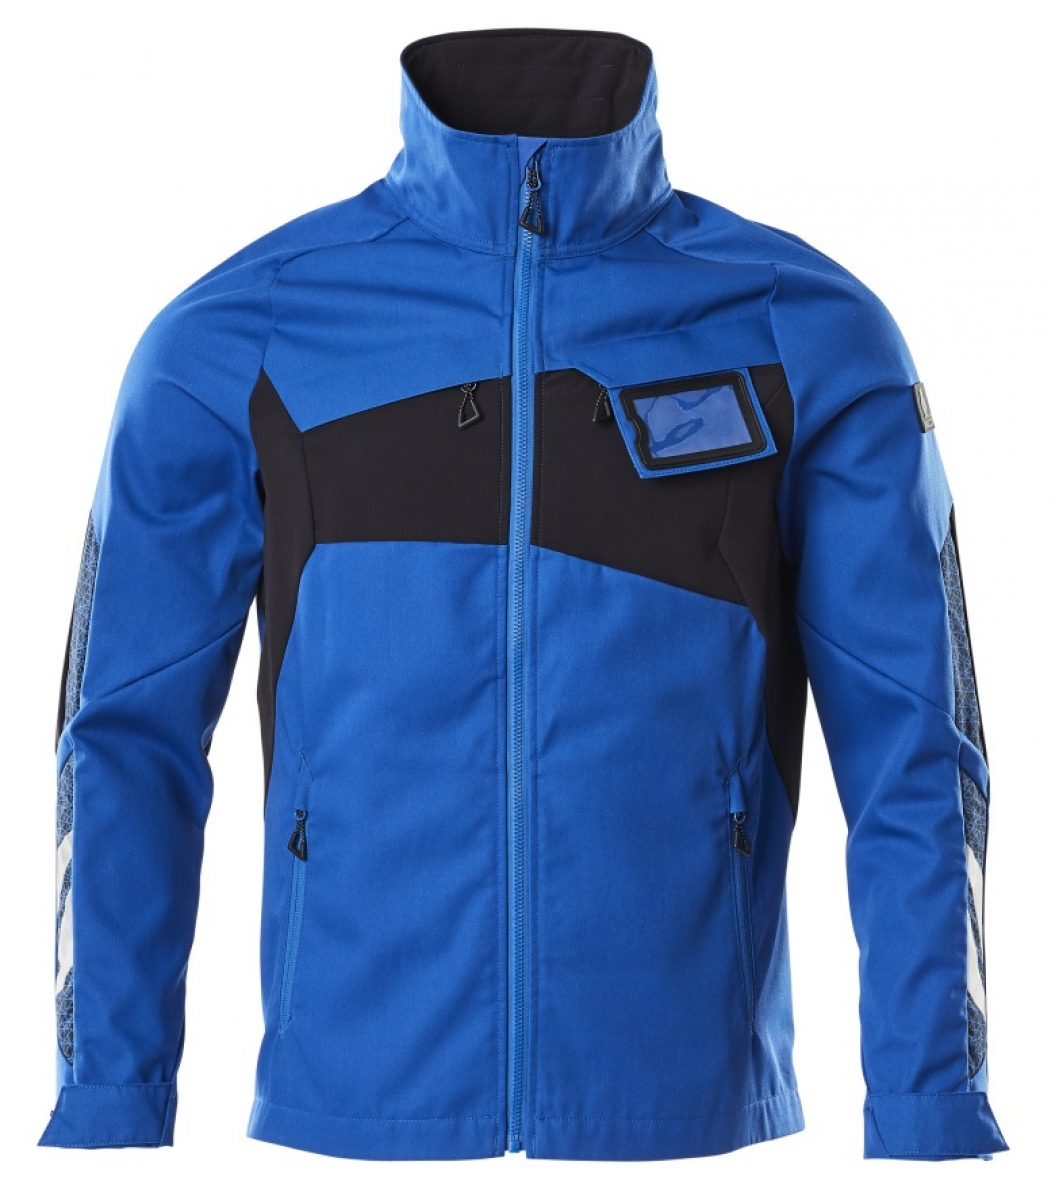 MASCOT-Workwear, Klteschutz, Softshell-Arbeitsjacke, 270 g/m, azurblau/schwarzblau